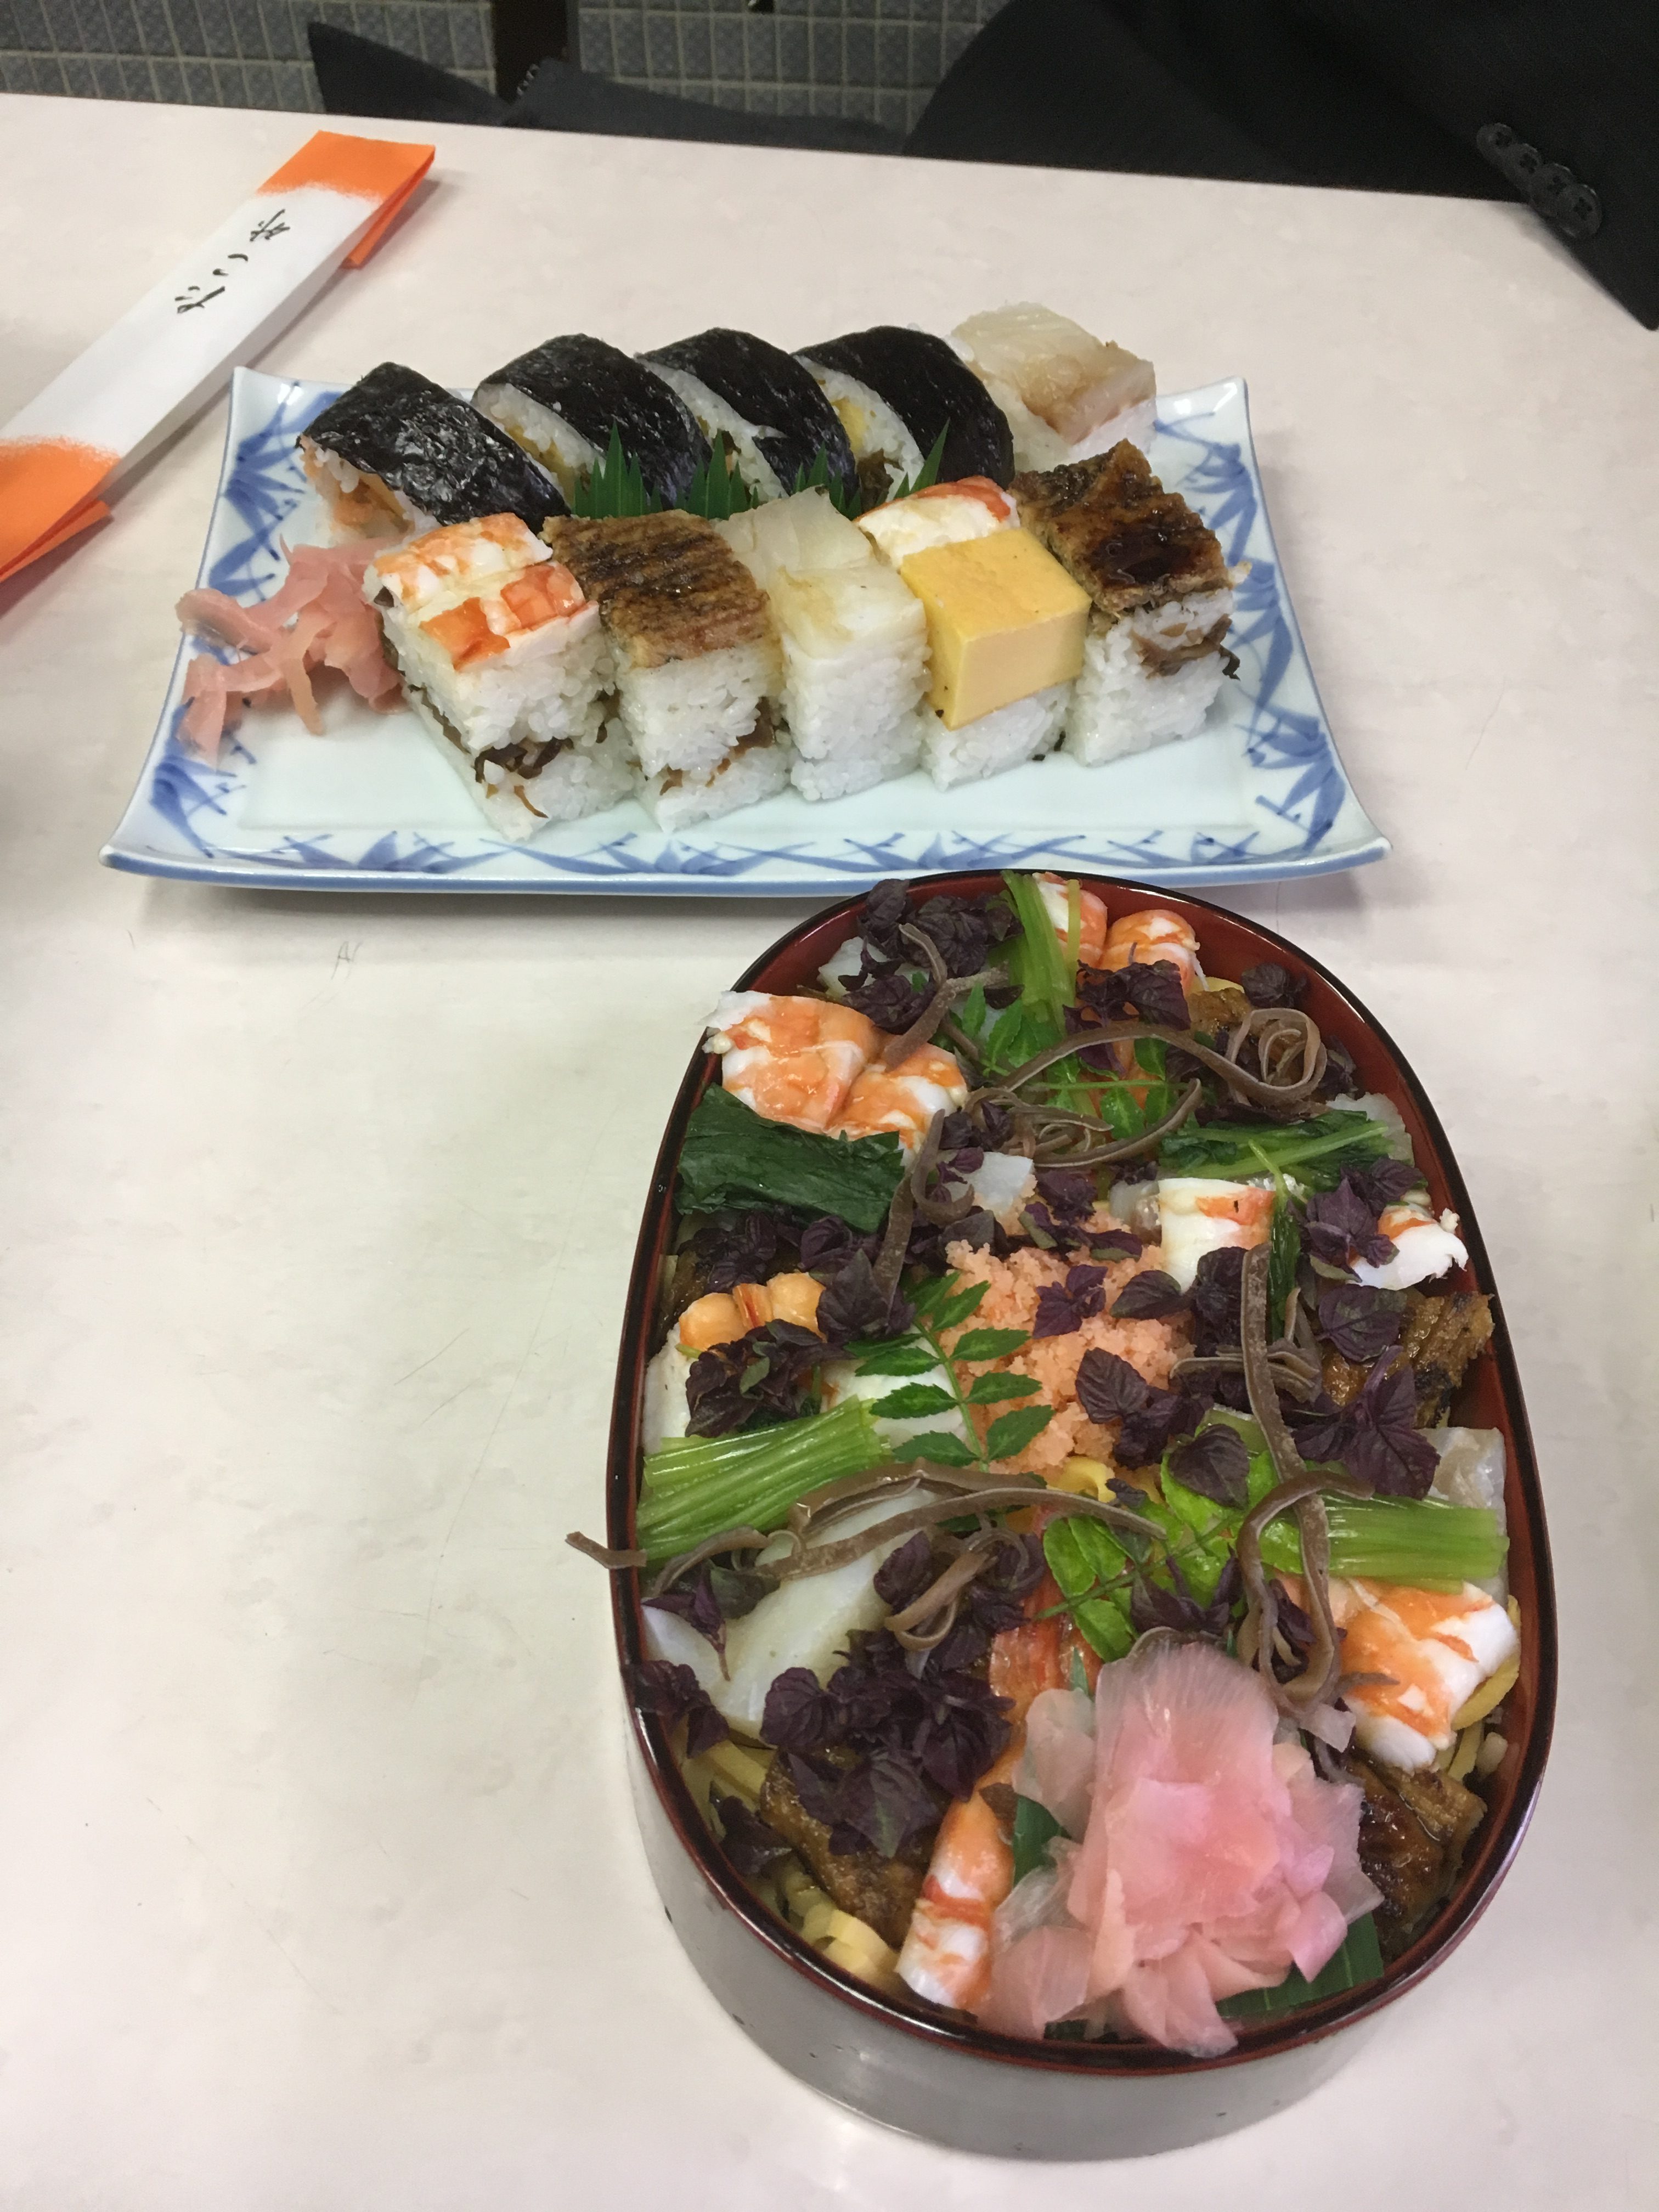 Osaka sushi and chirashi sushi at Takotake